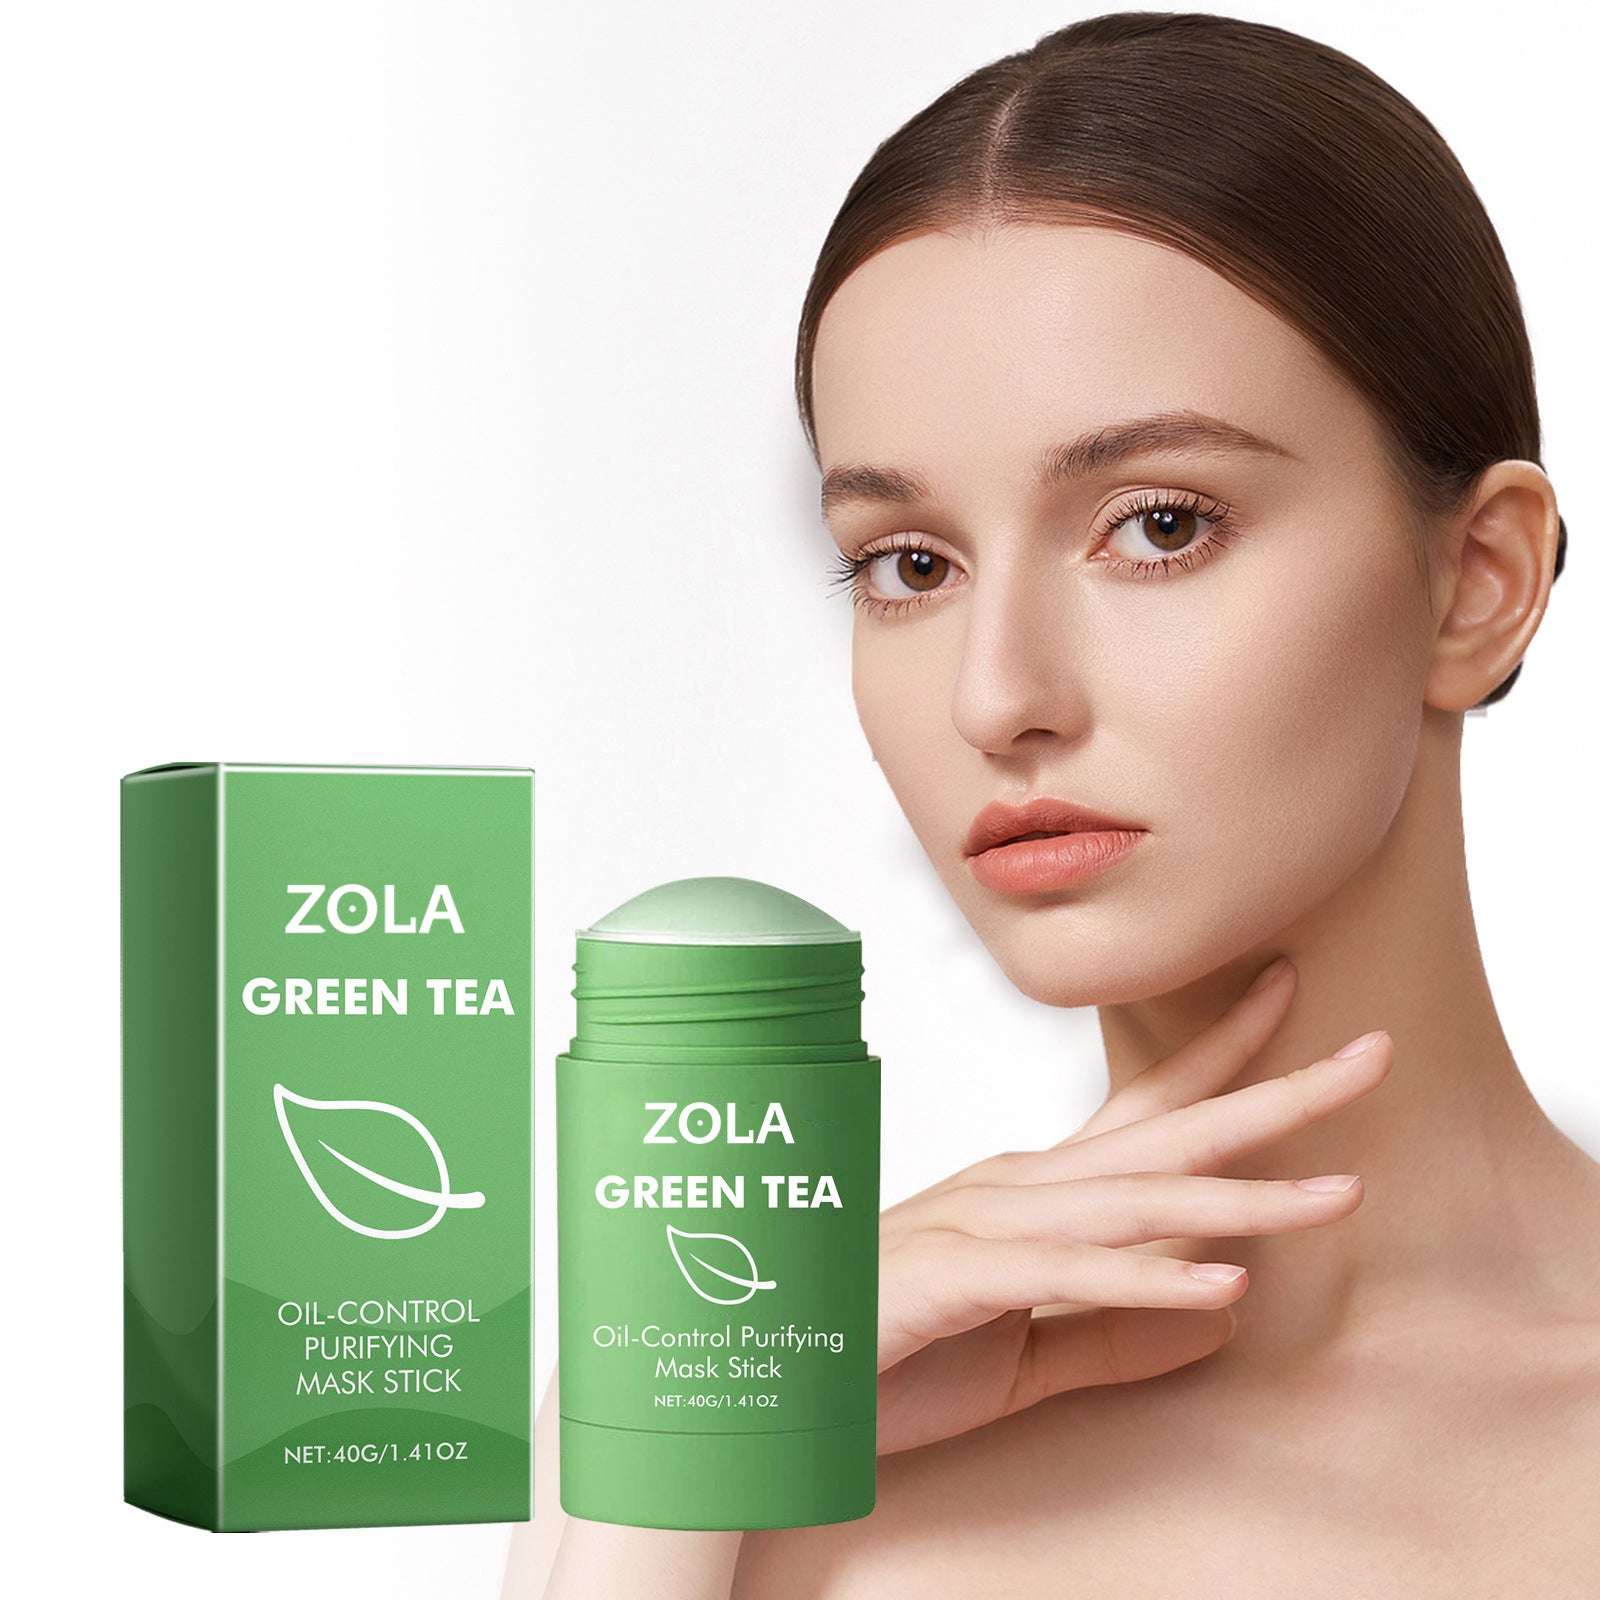 Zola Green Tea Mask